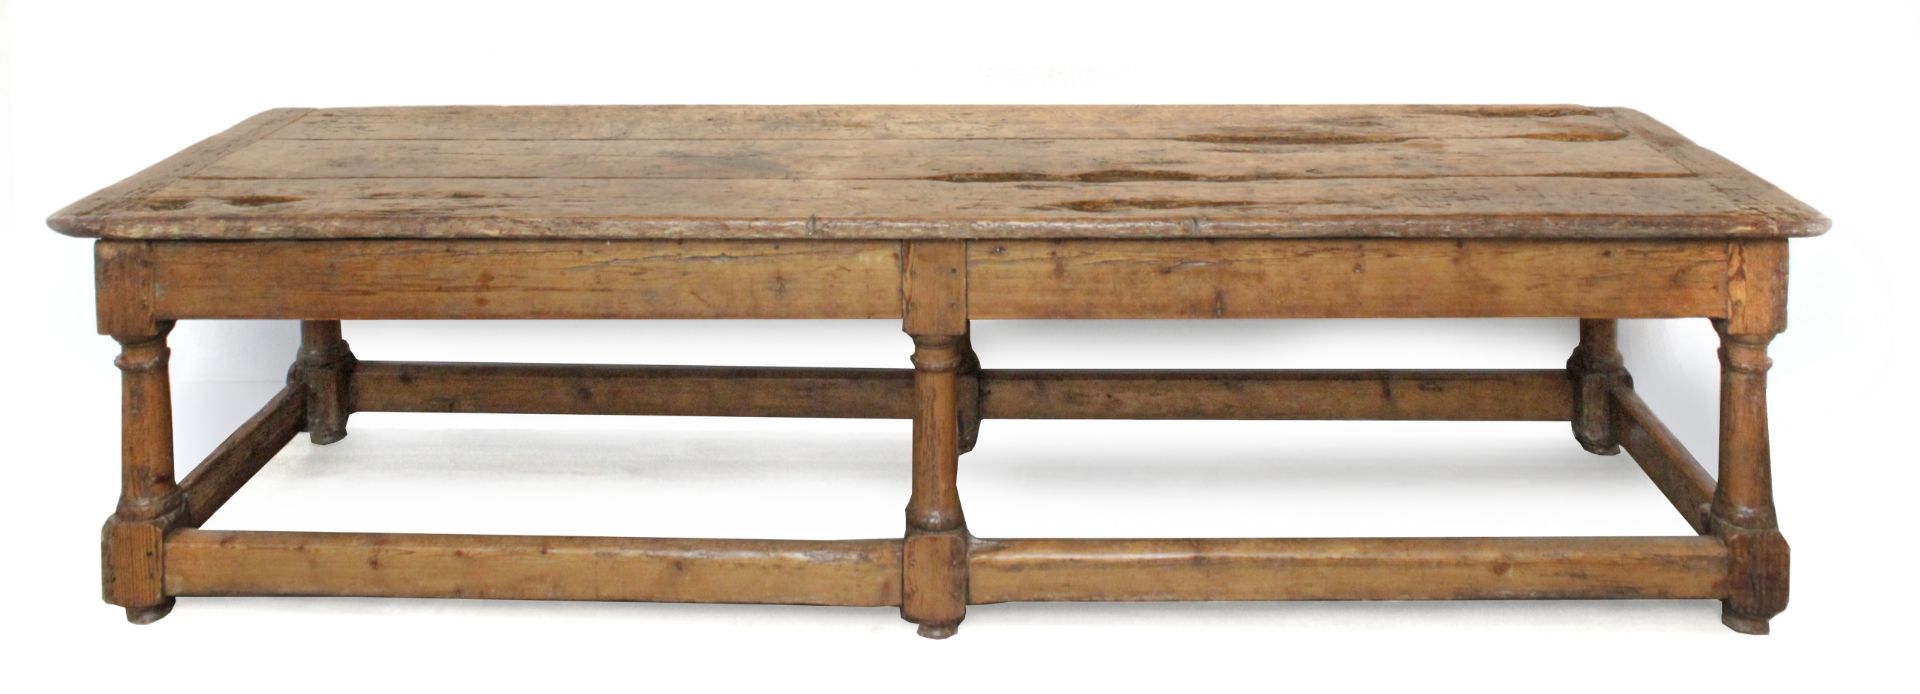 A 17th century Castilian convent pine table